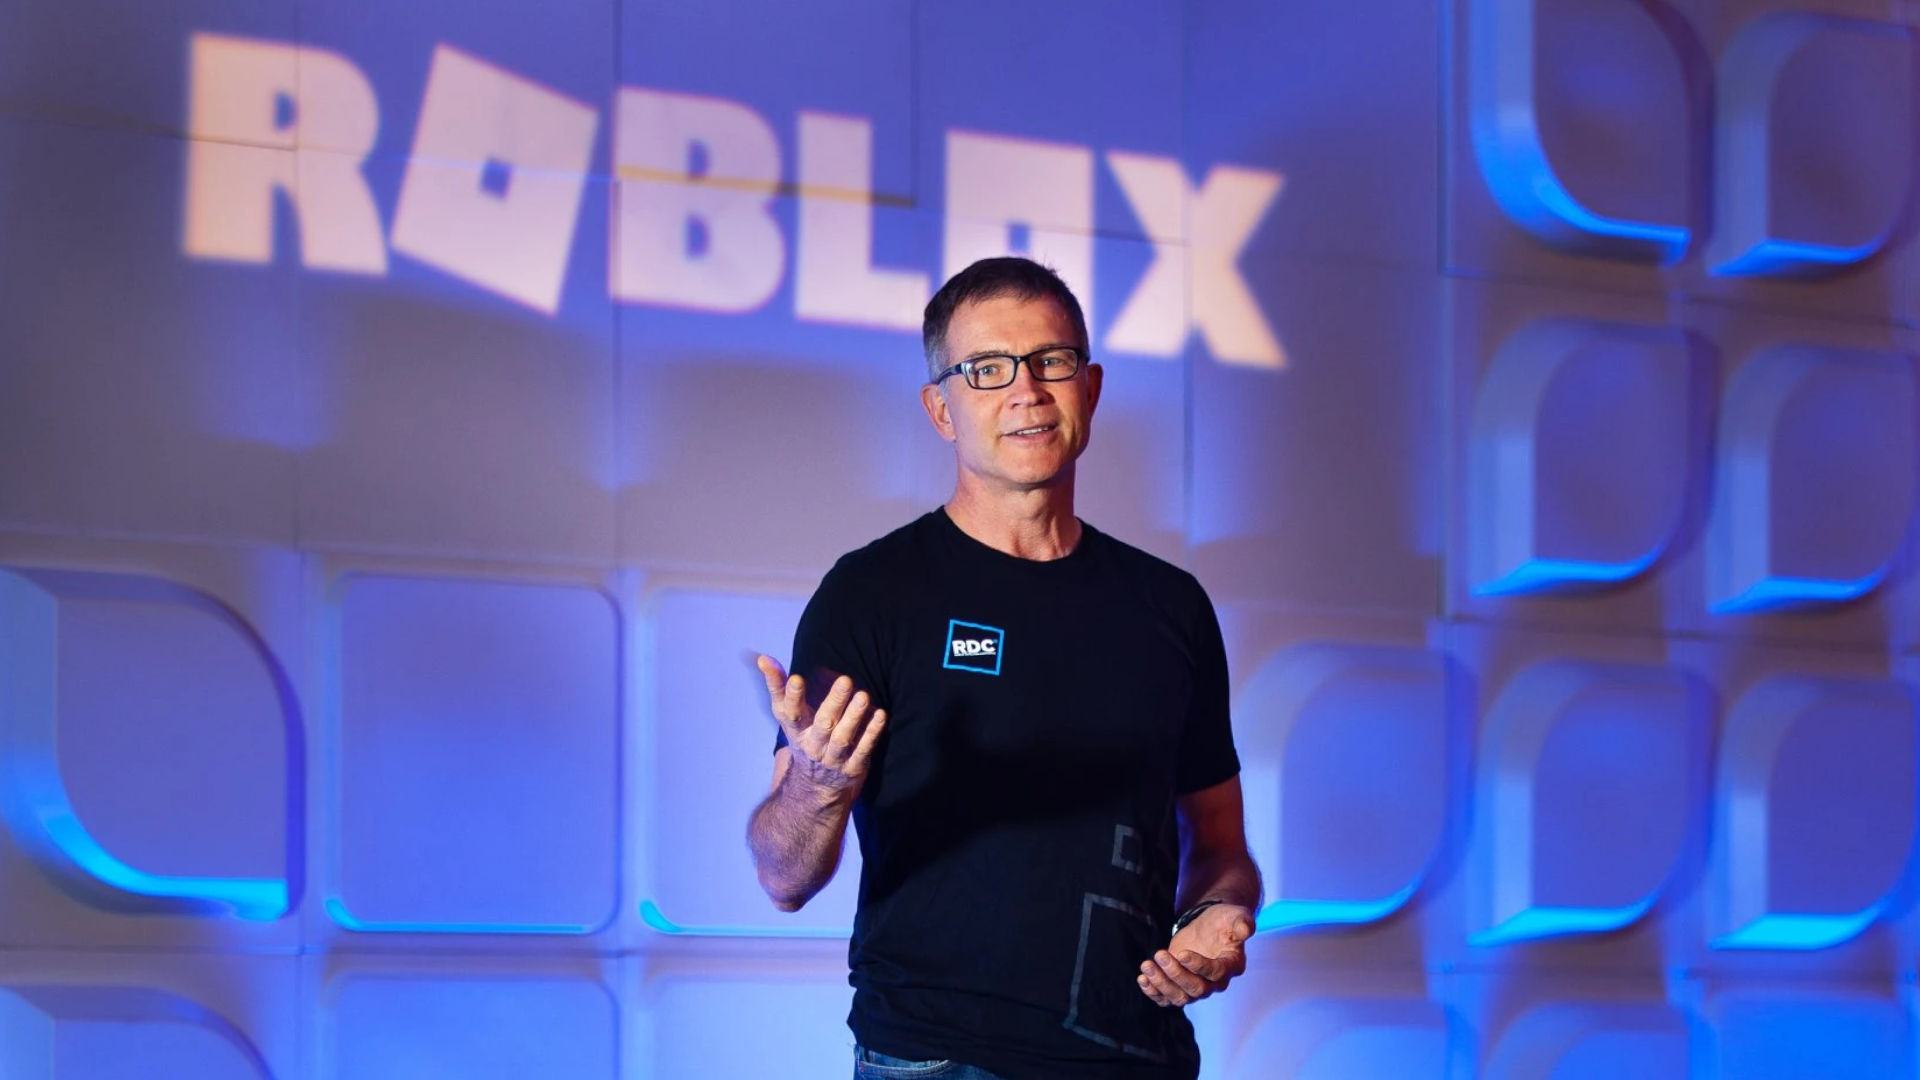 Roblox saw $655.3 million in Q1 revenue, 14.5 billion 'engaged hours